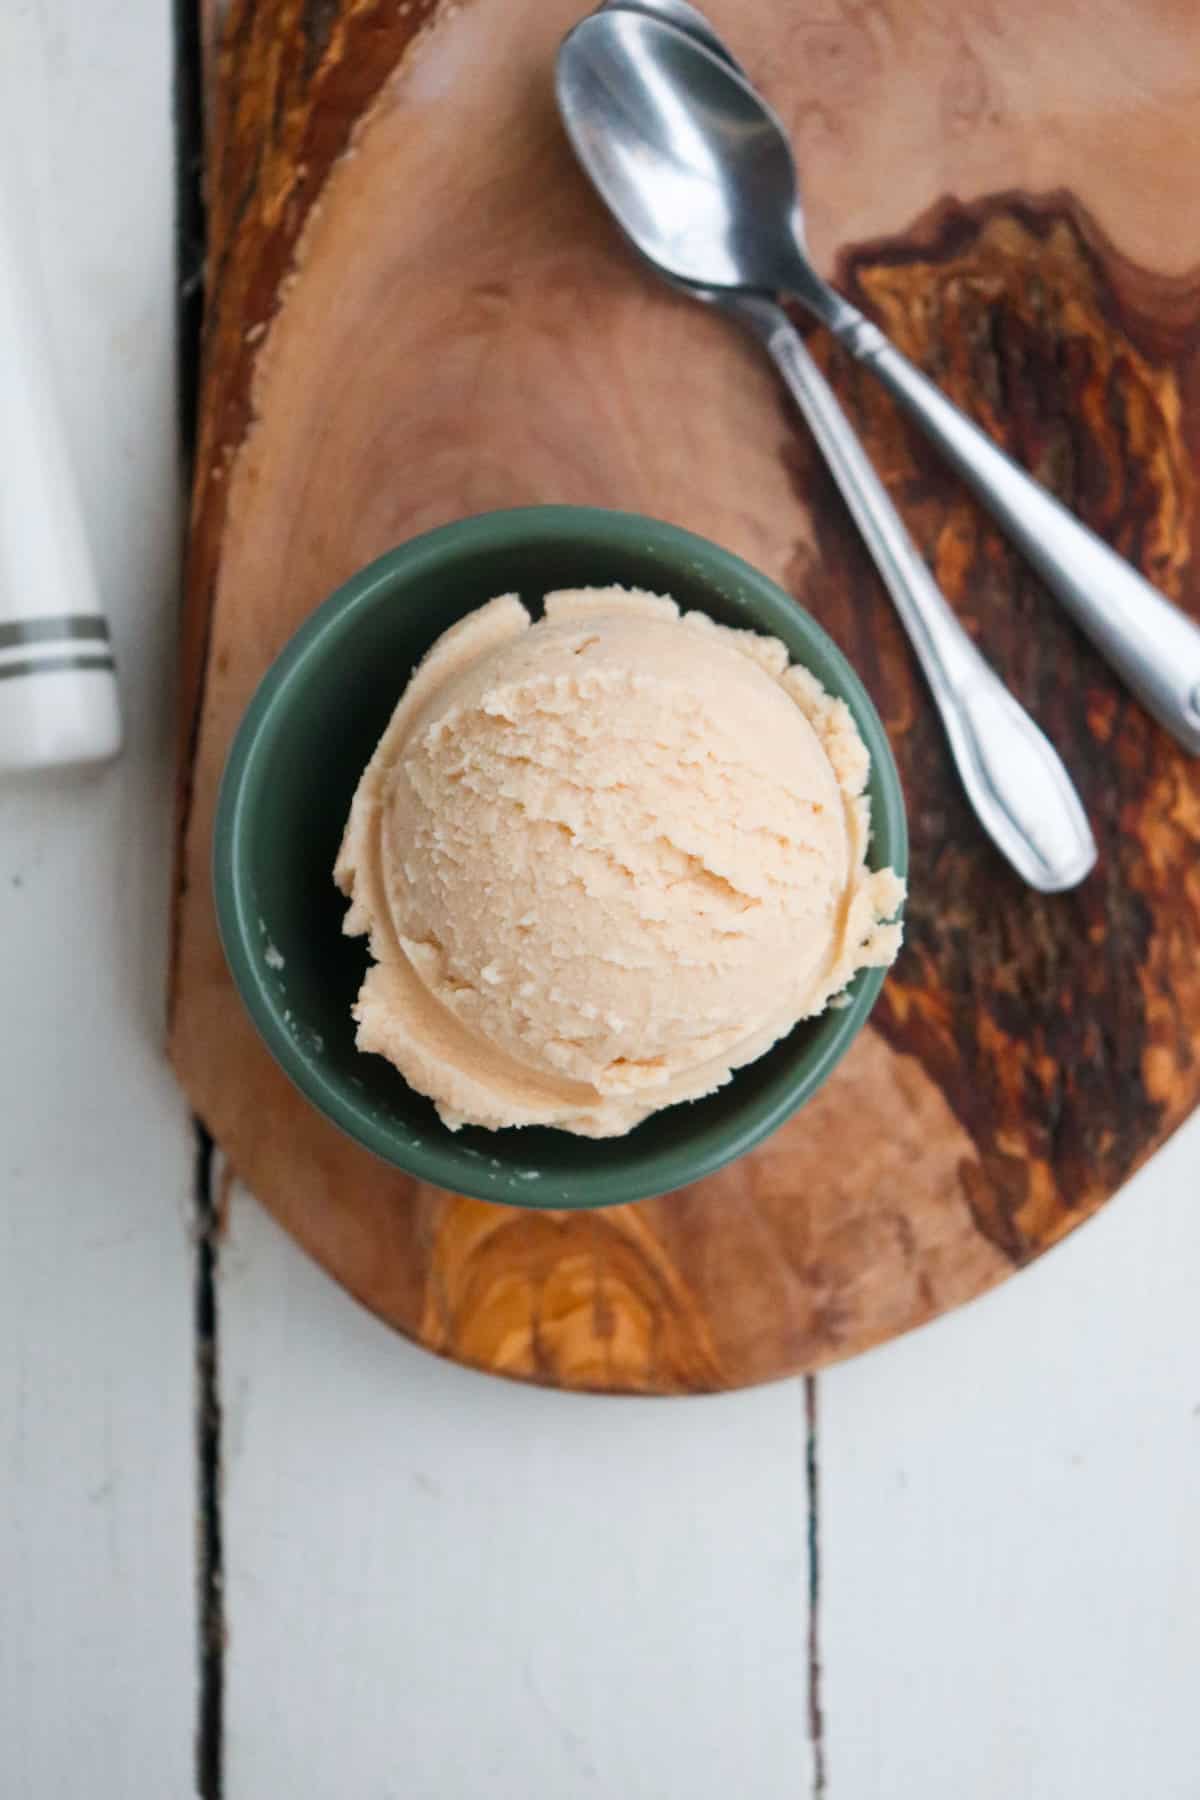 scoop of ninja creami peanut butter ice cream on a wooden board.